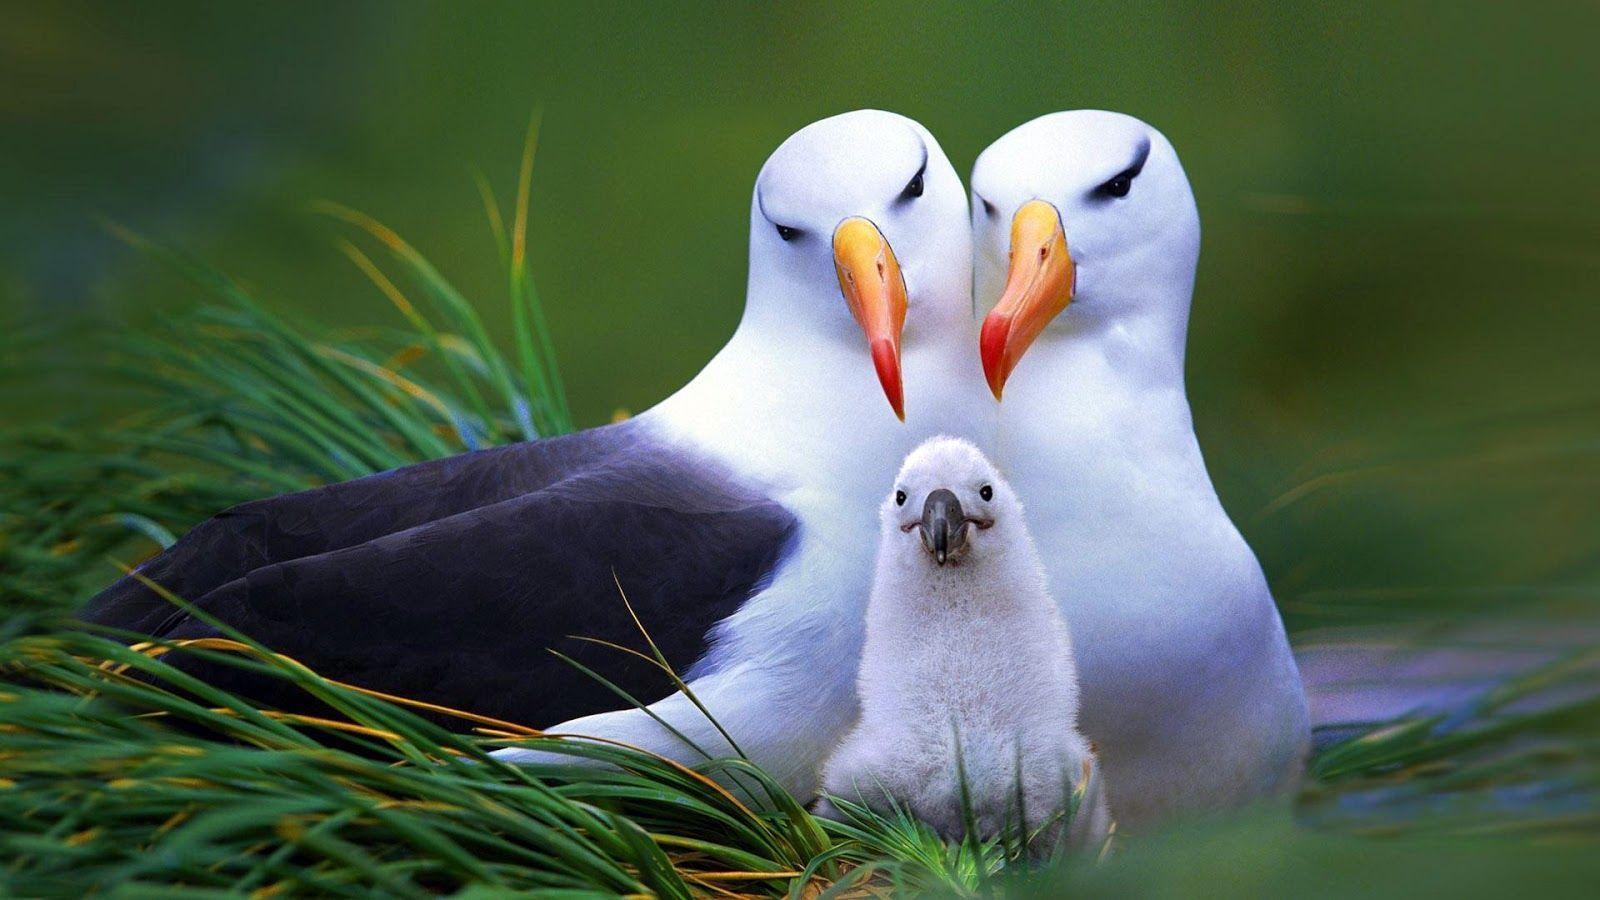 Incredible Image: Love Birds (High resolution)